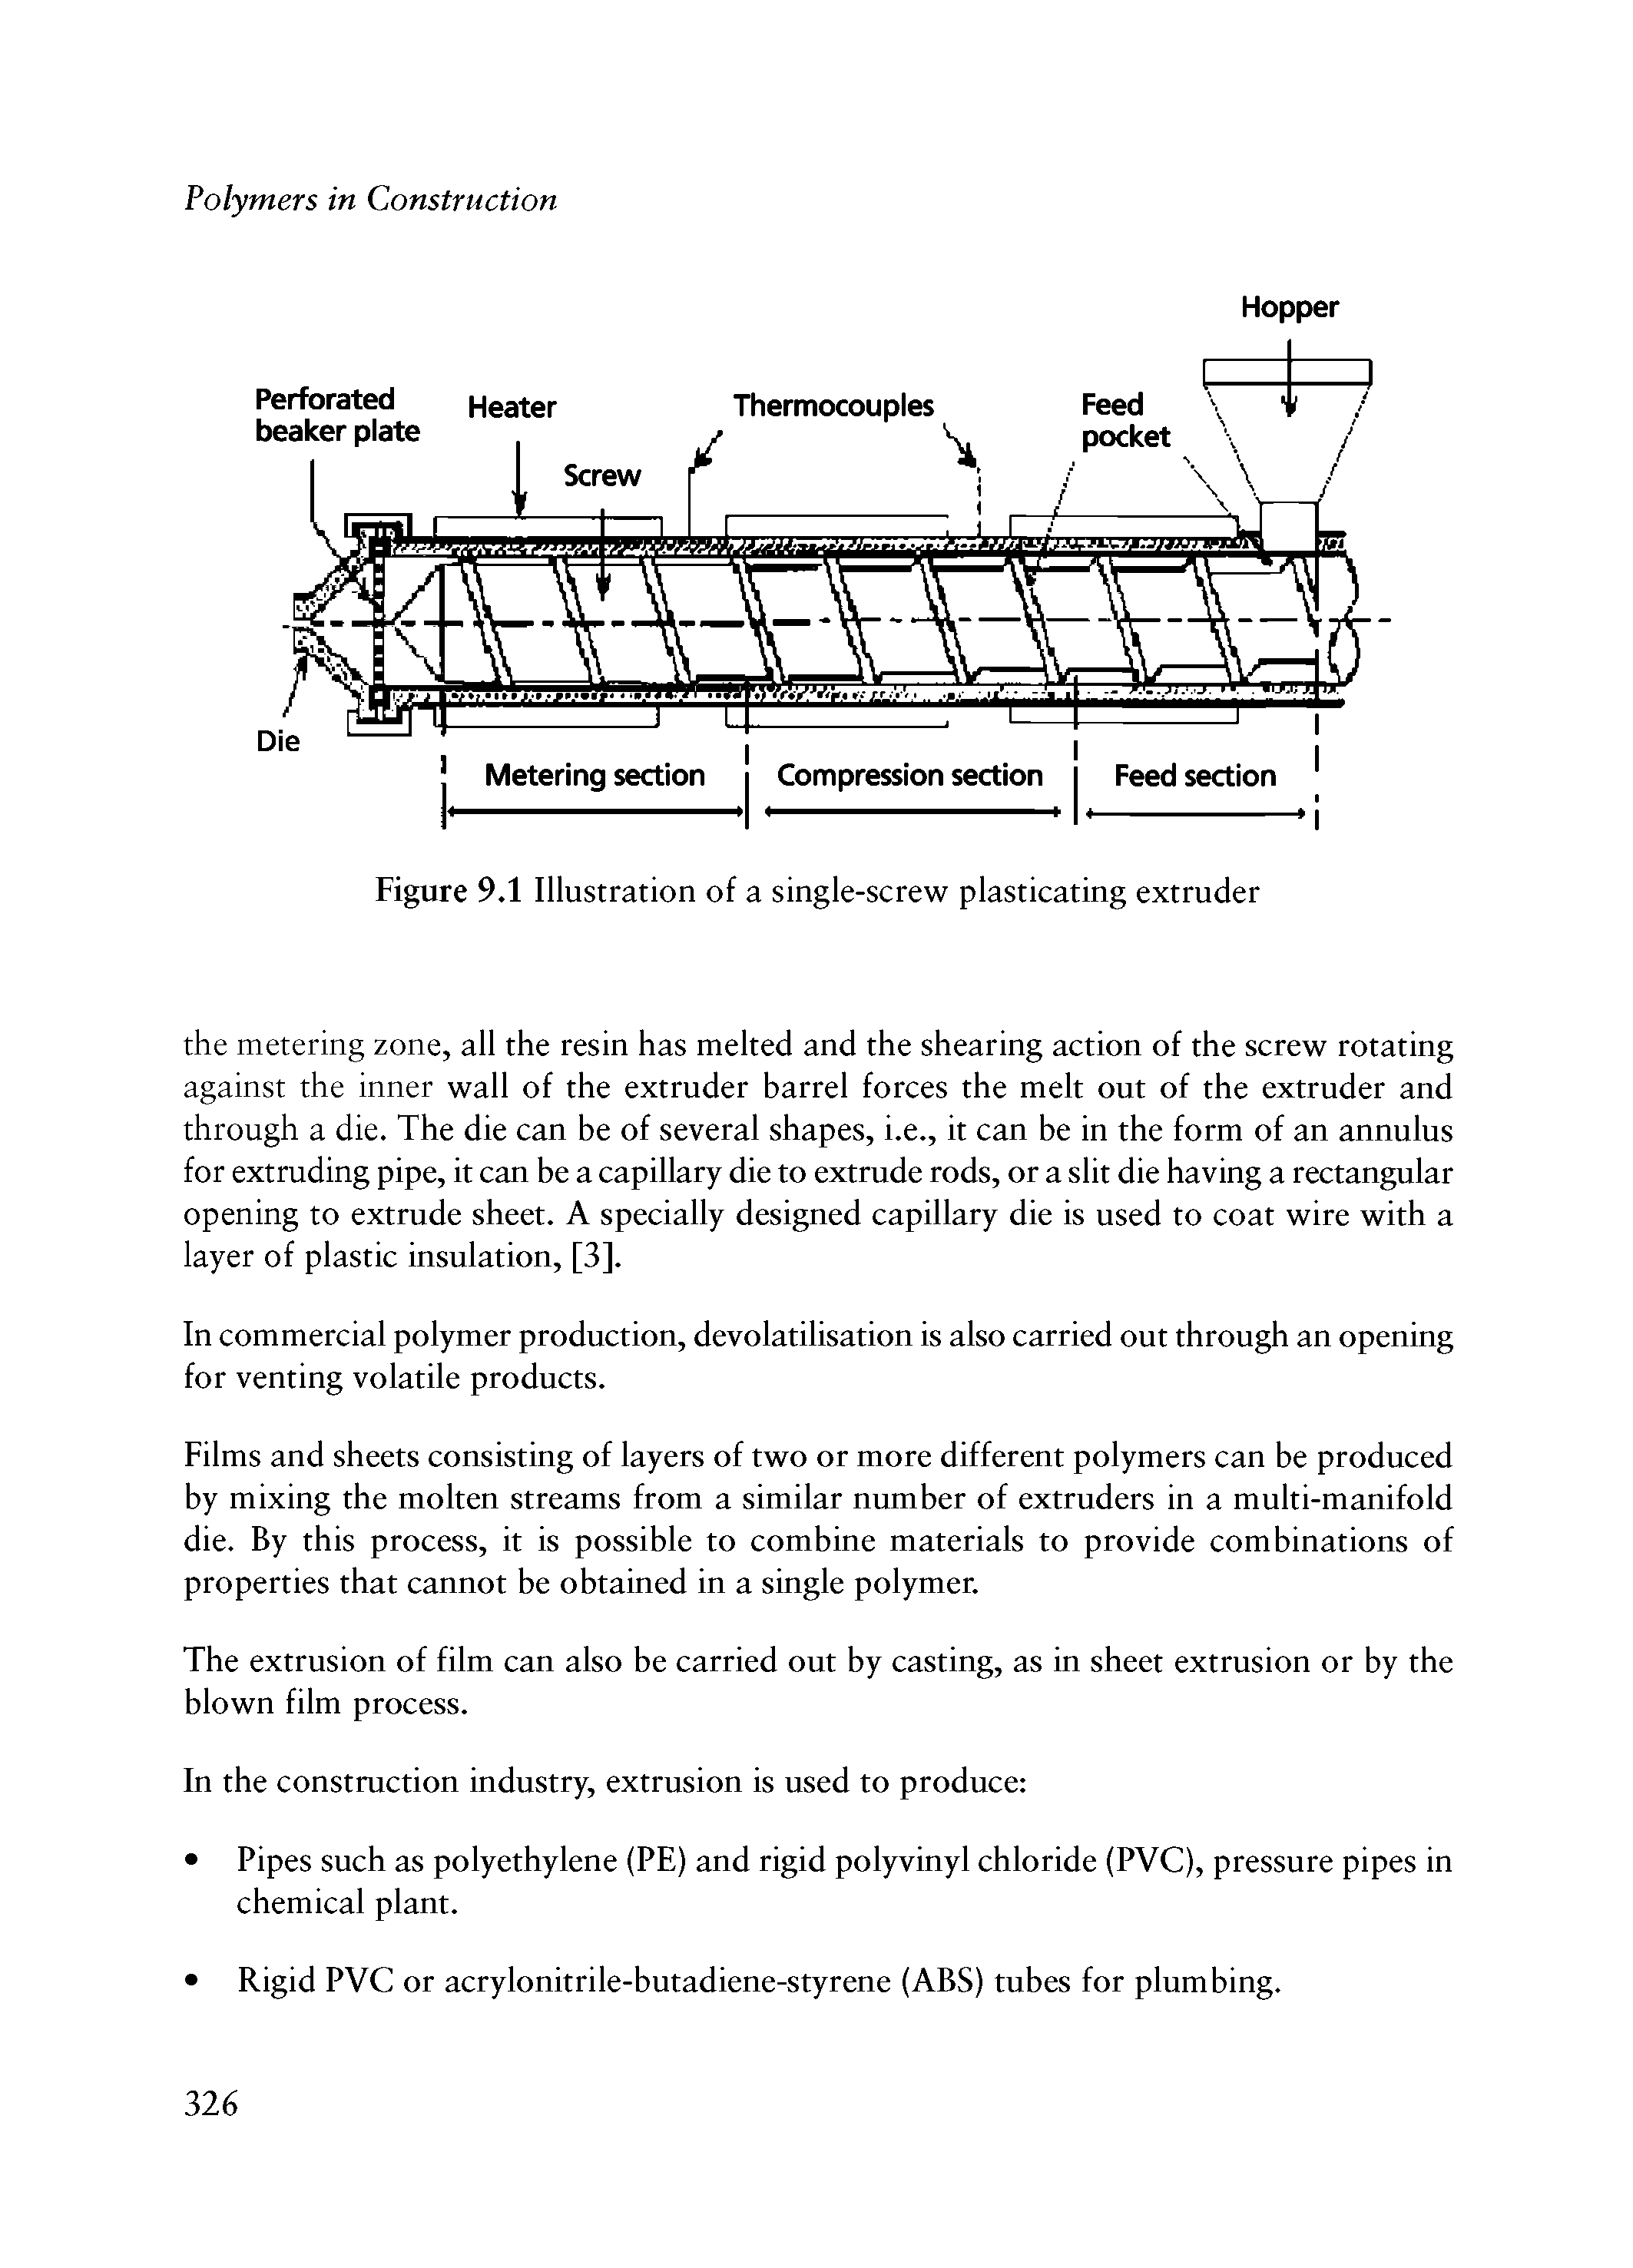 Figure 9.1 Illustration of a single-screw plasticating extruder...